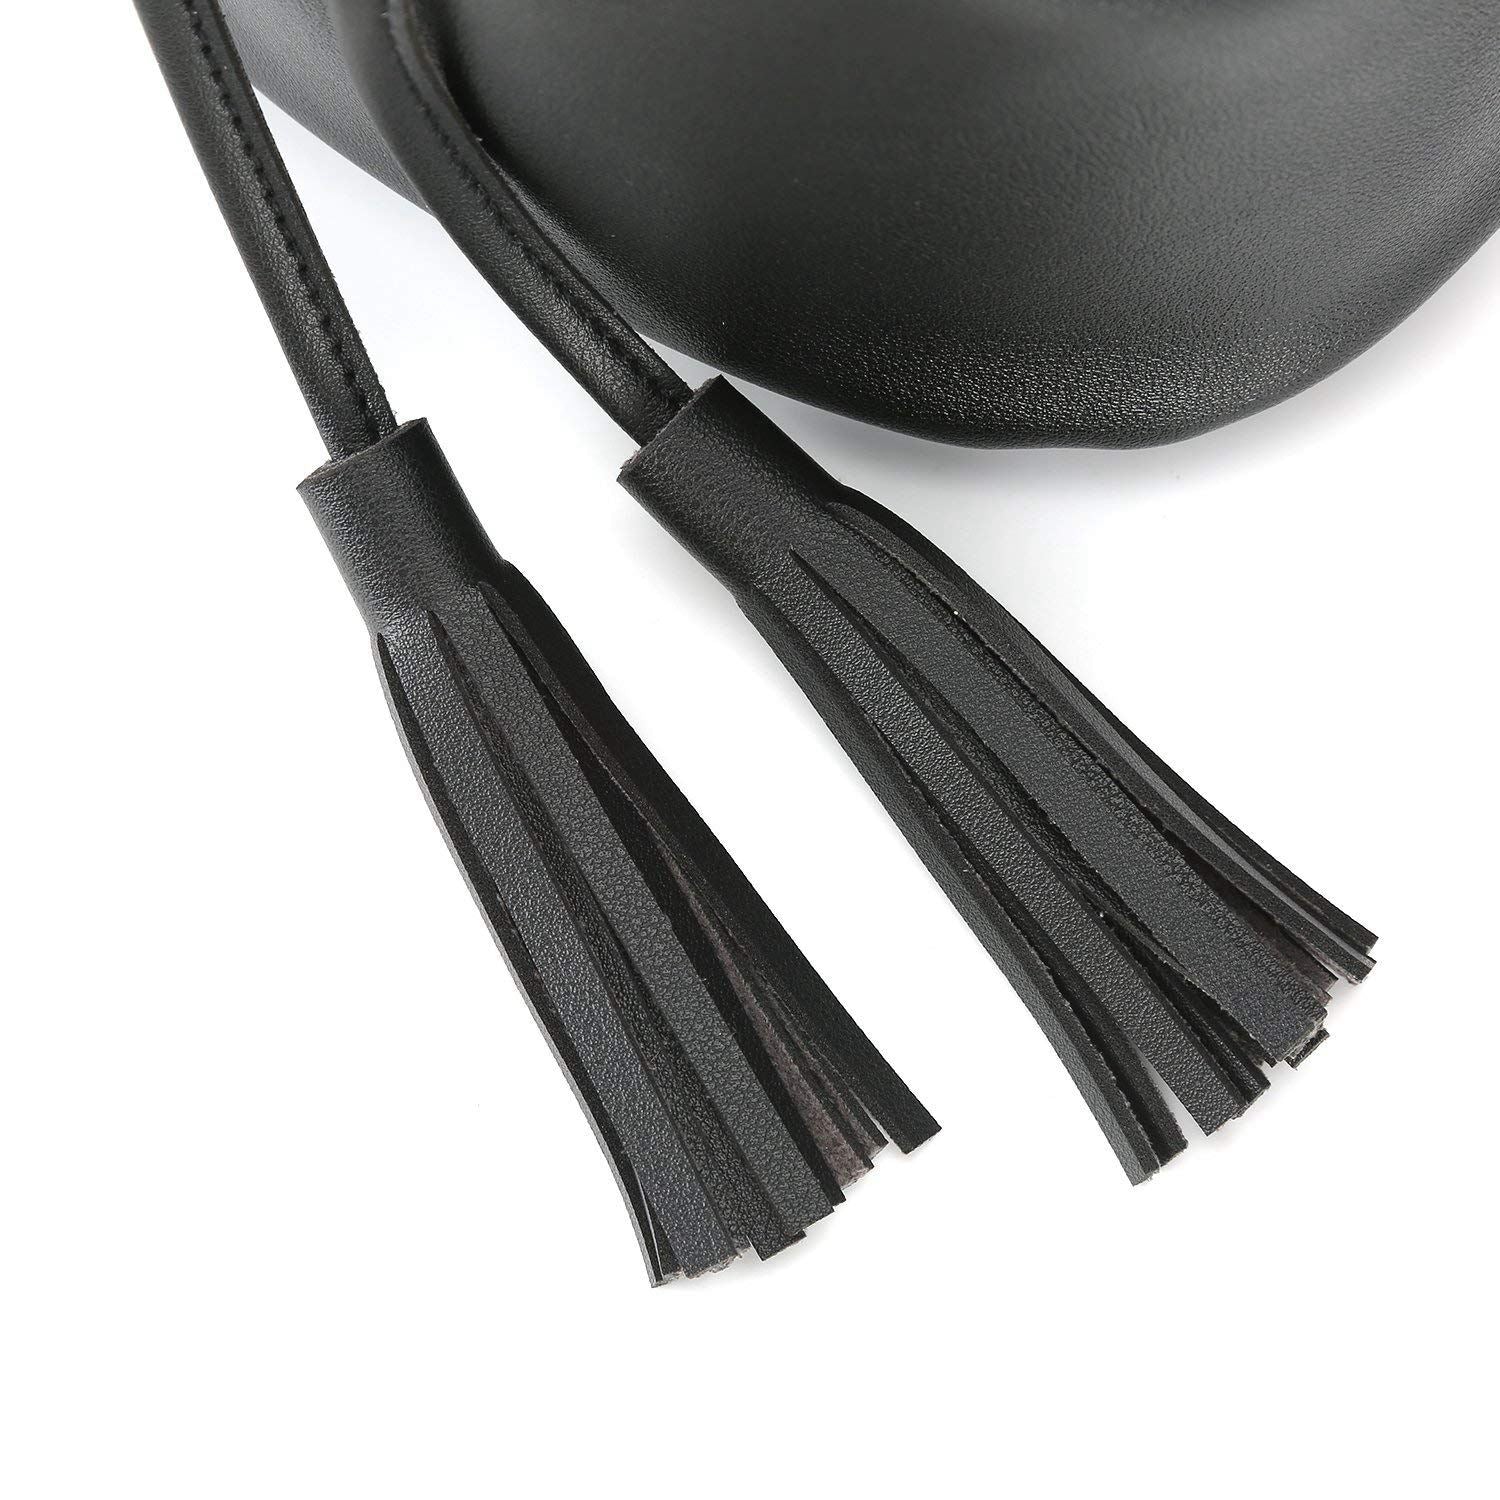 Crossbody Handbags Drawstring Bucket Bag for Women Shoulder Bag Purse Tote PU Leather Bags - ebowsos